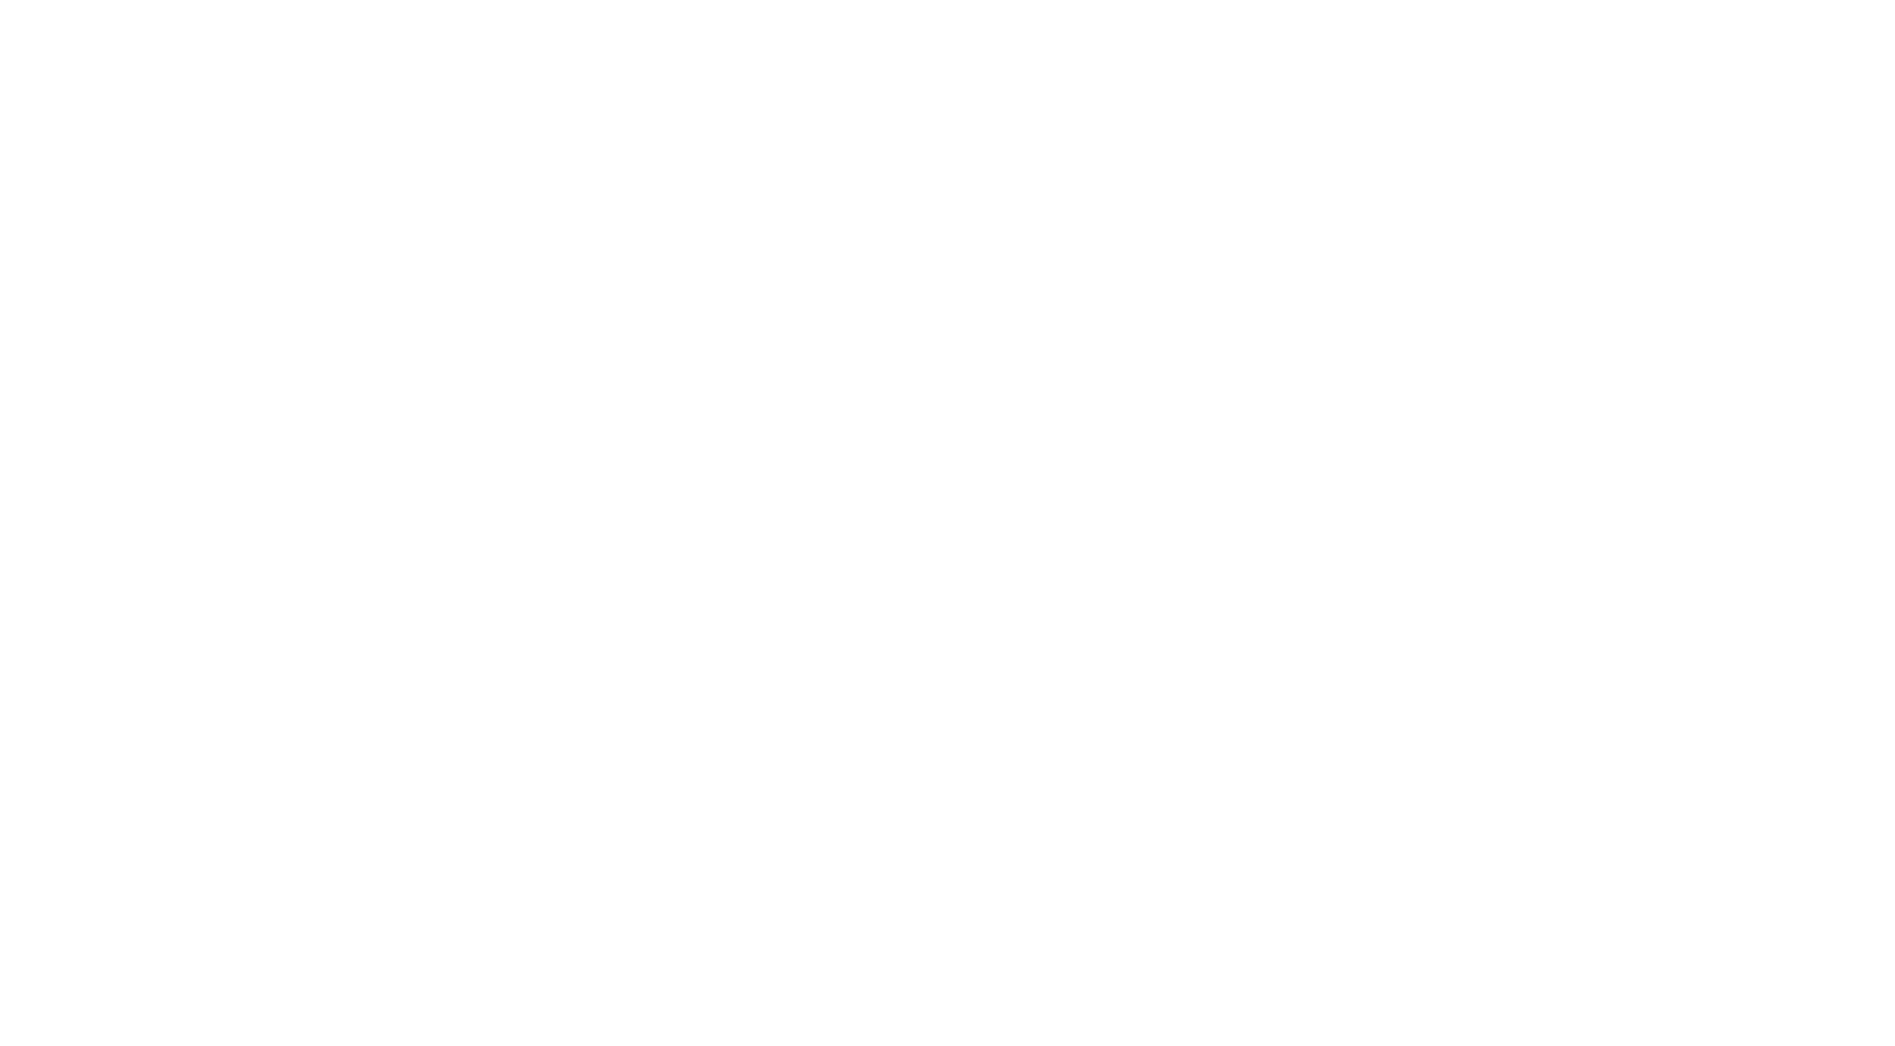 Acclaim Limited